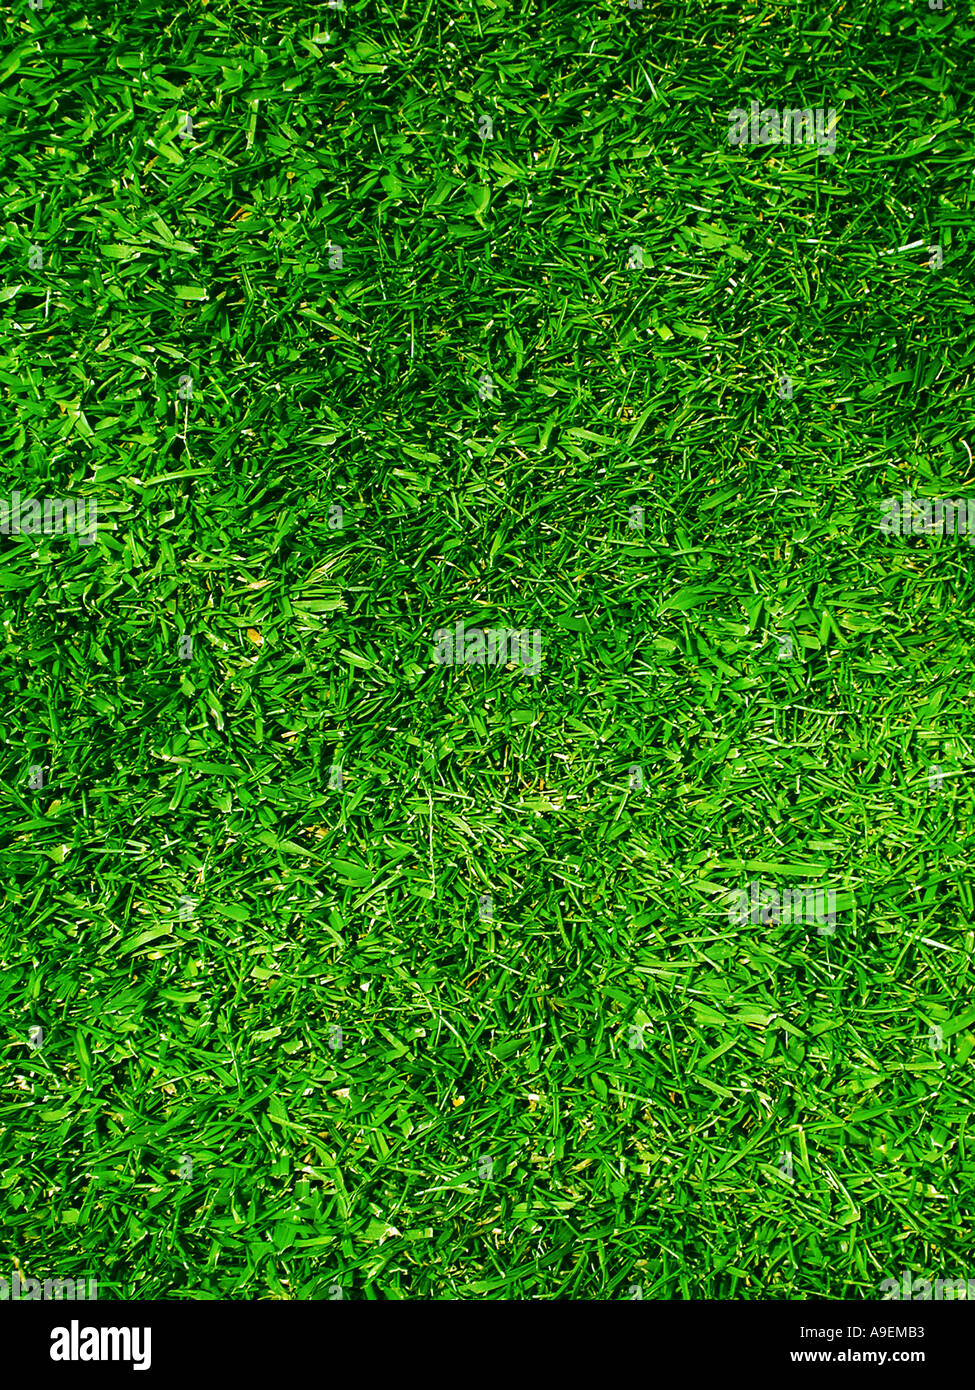 GEMEINSAMEN Namen Grass lateinischen Namen Grass Stockfoto